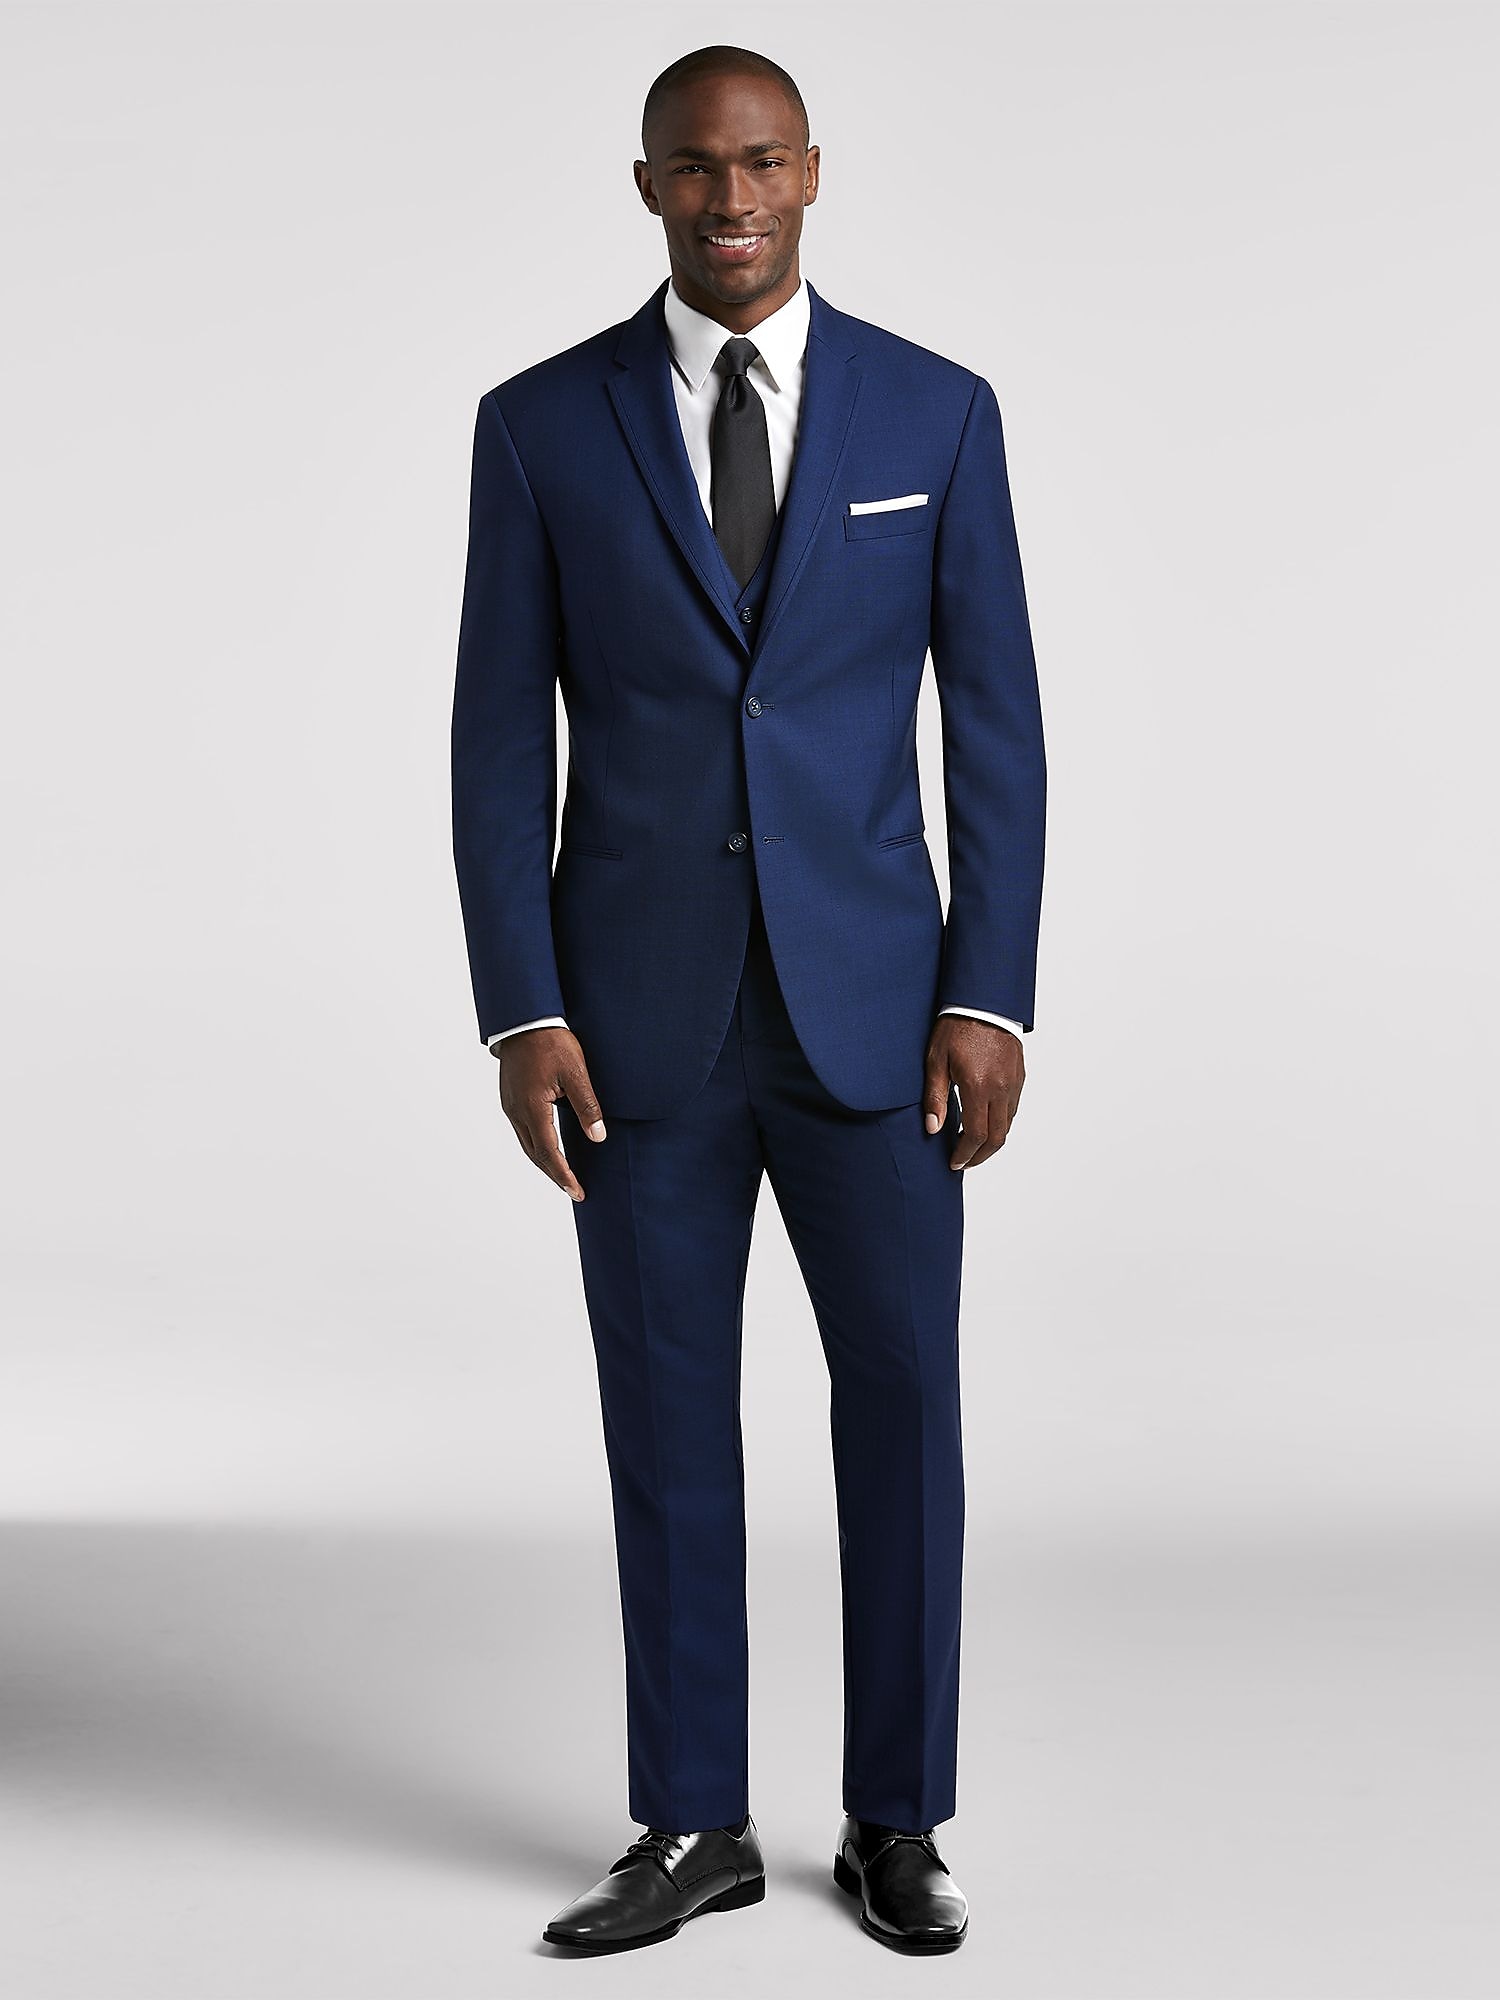 Blue Wedding Suit By Calvin Klein Suit Rental Men S Wearhouse